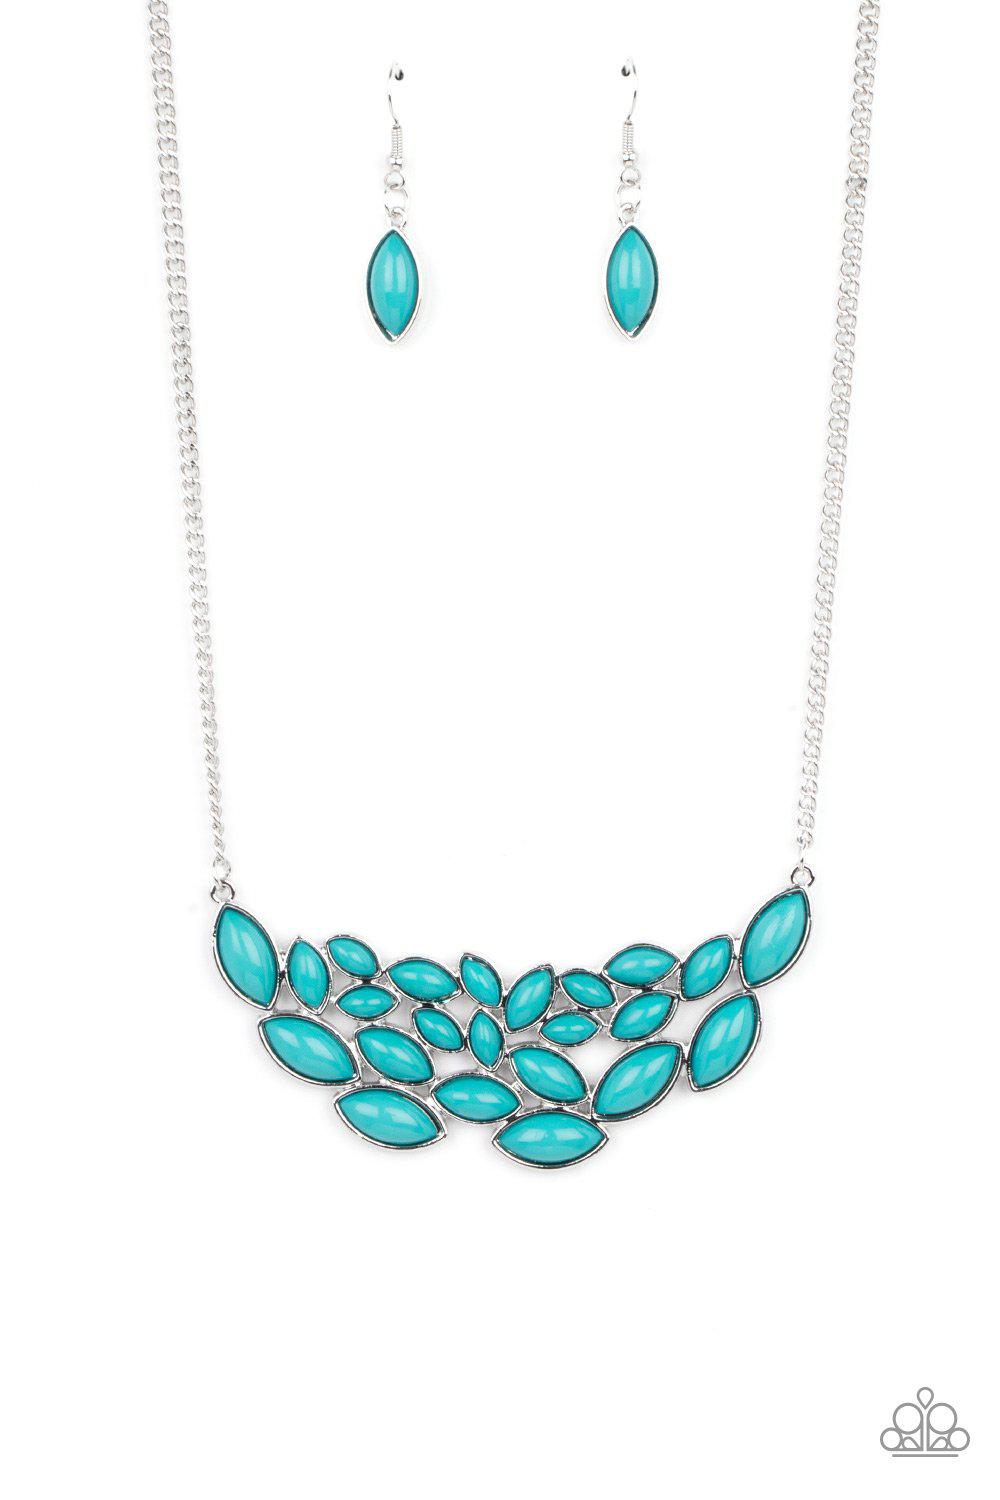 Eden Escape Blue Necklace - Paparazzi Accessories- lightbox - CarasShop.com - $5 Jewelry by Cara Jewels